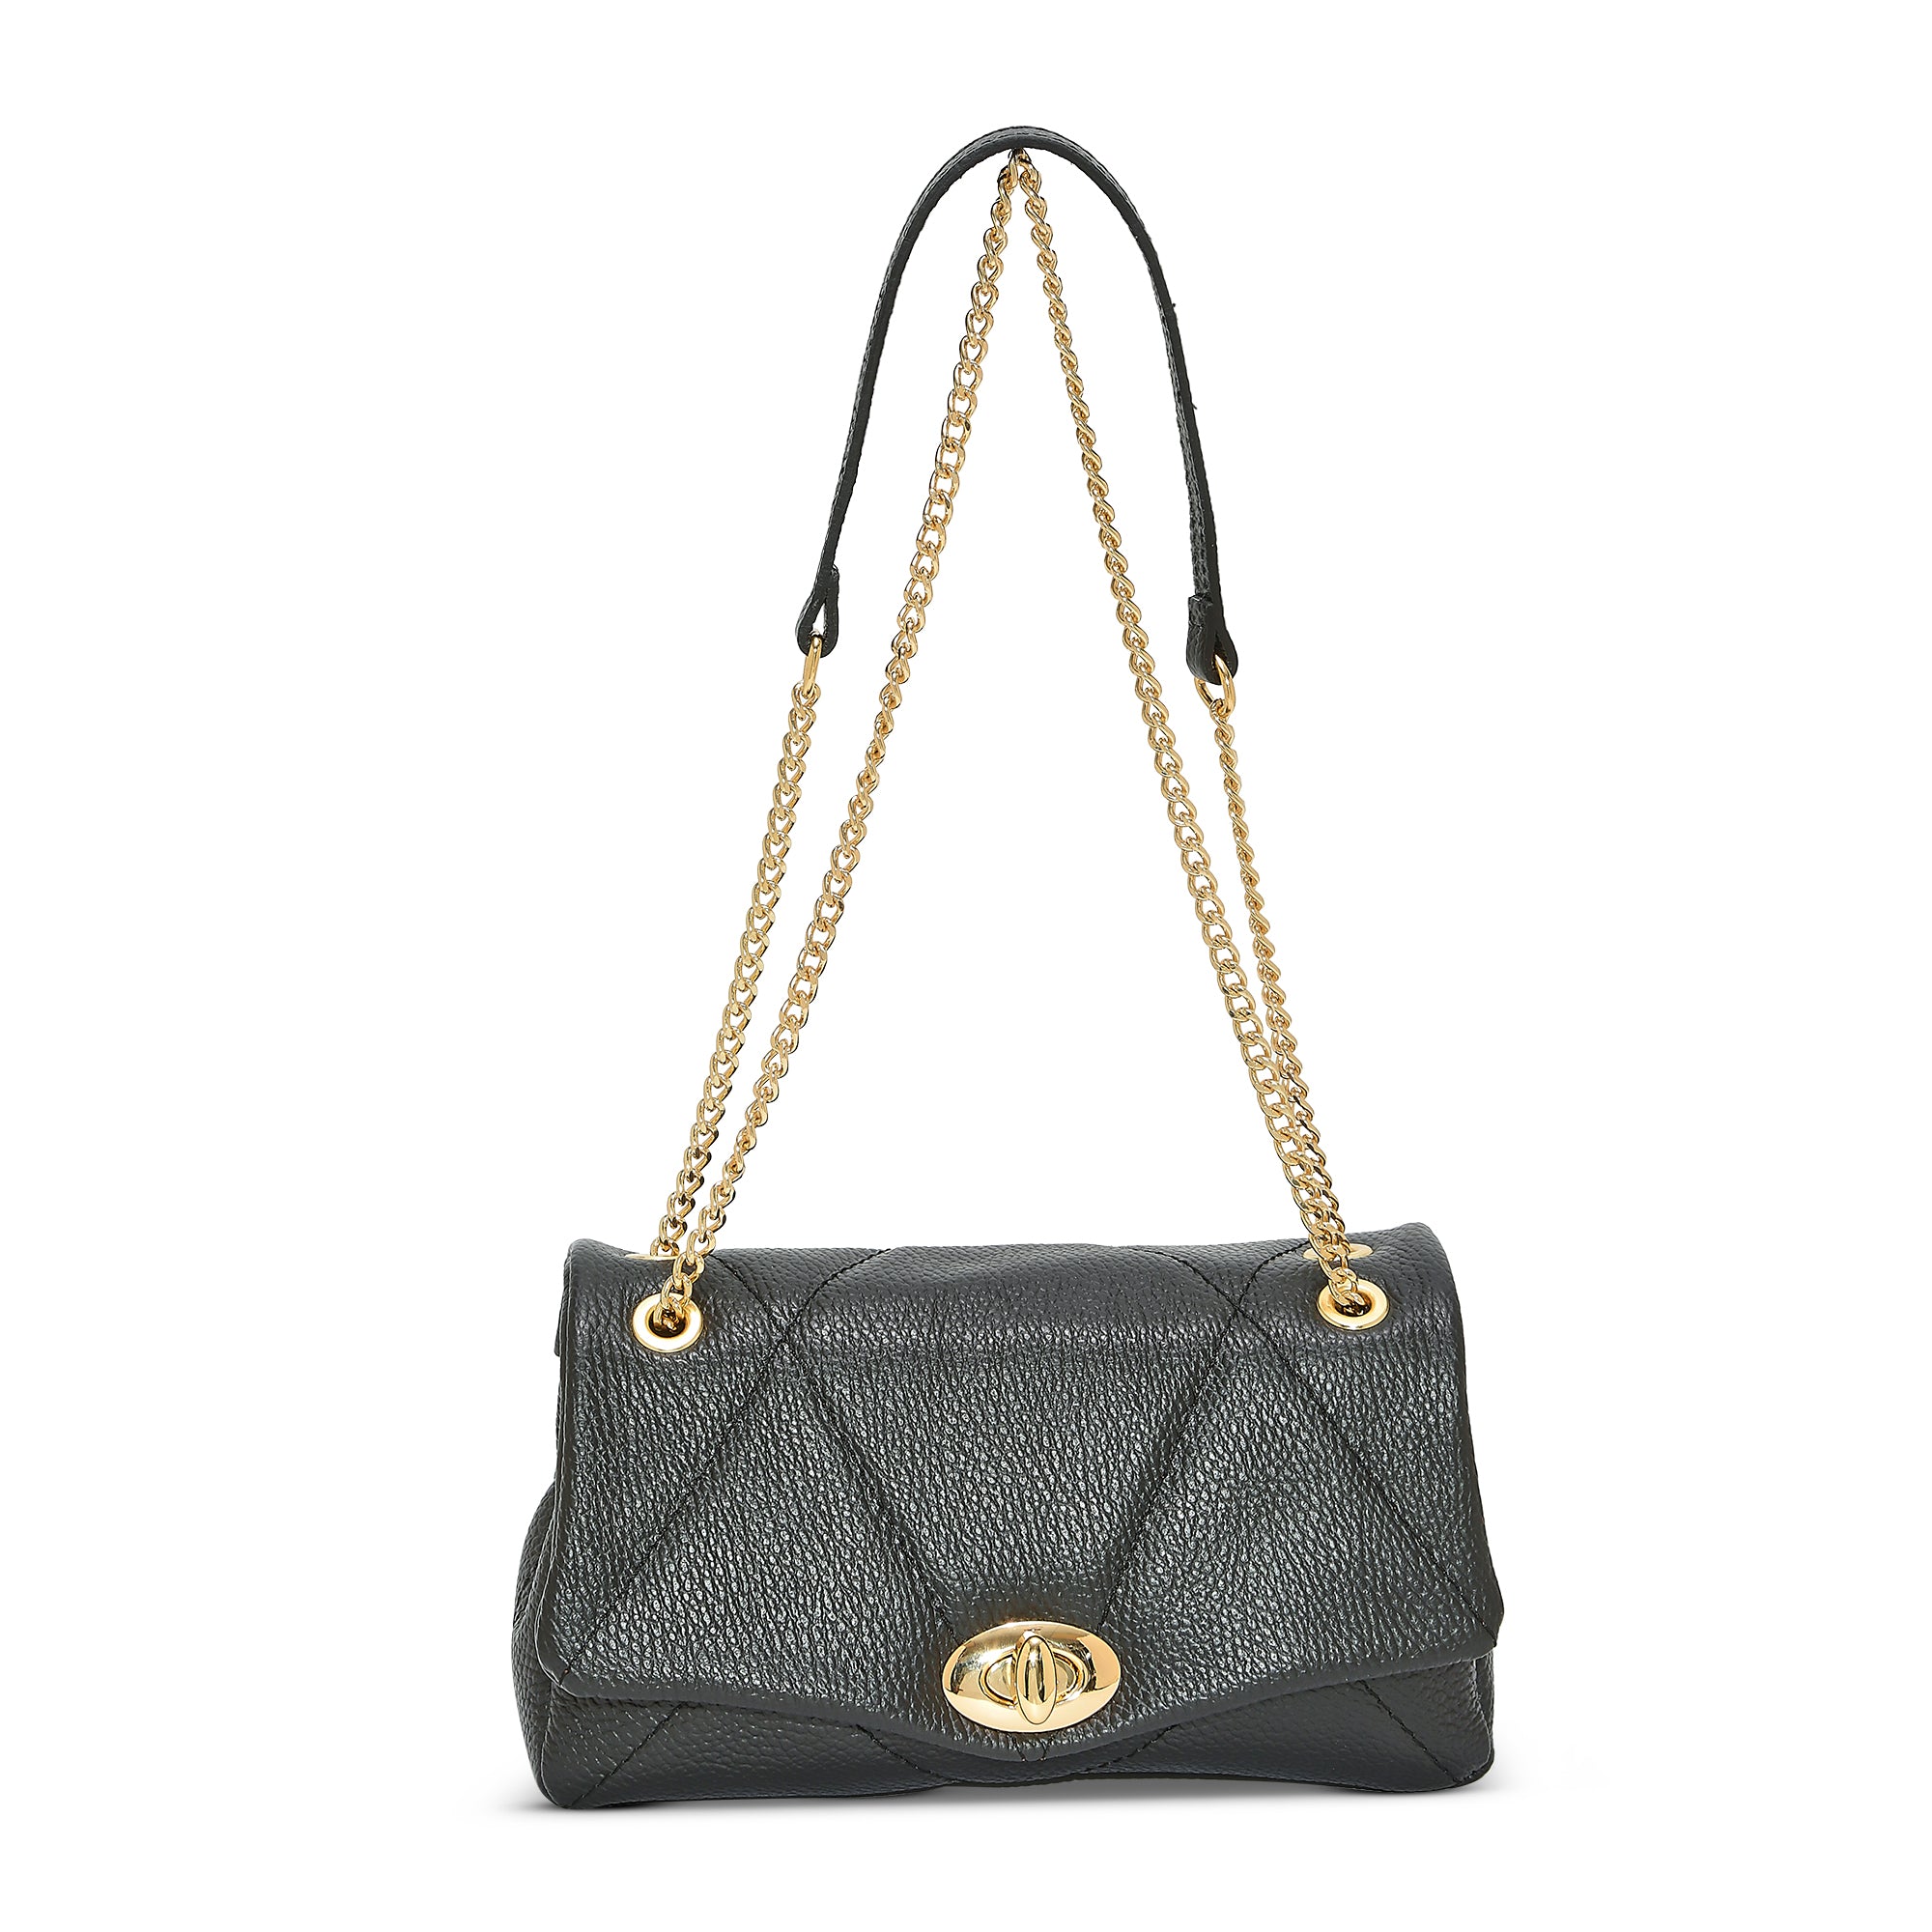 Diana Handbag/ Shoulder Bag